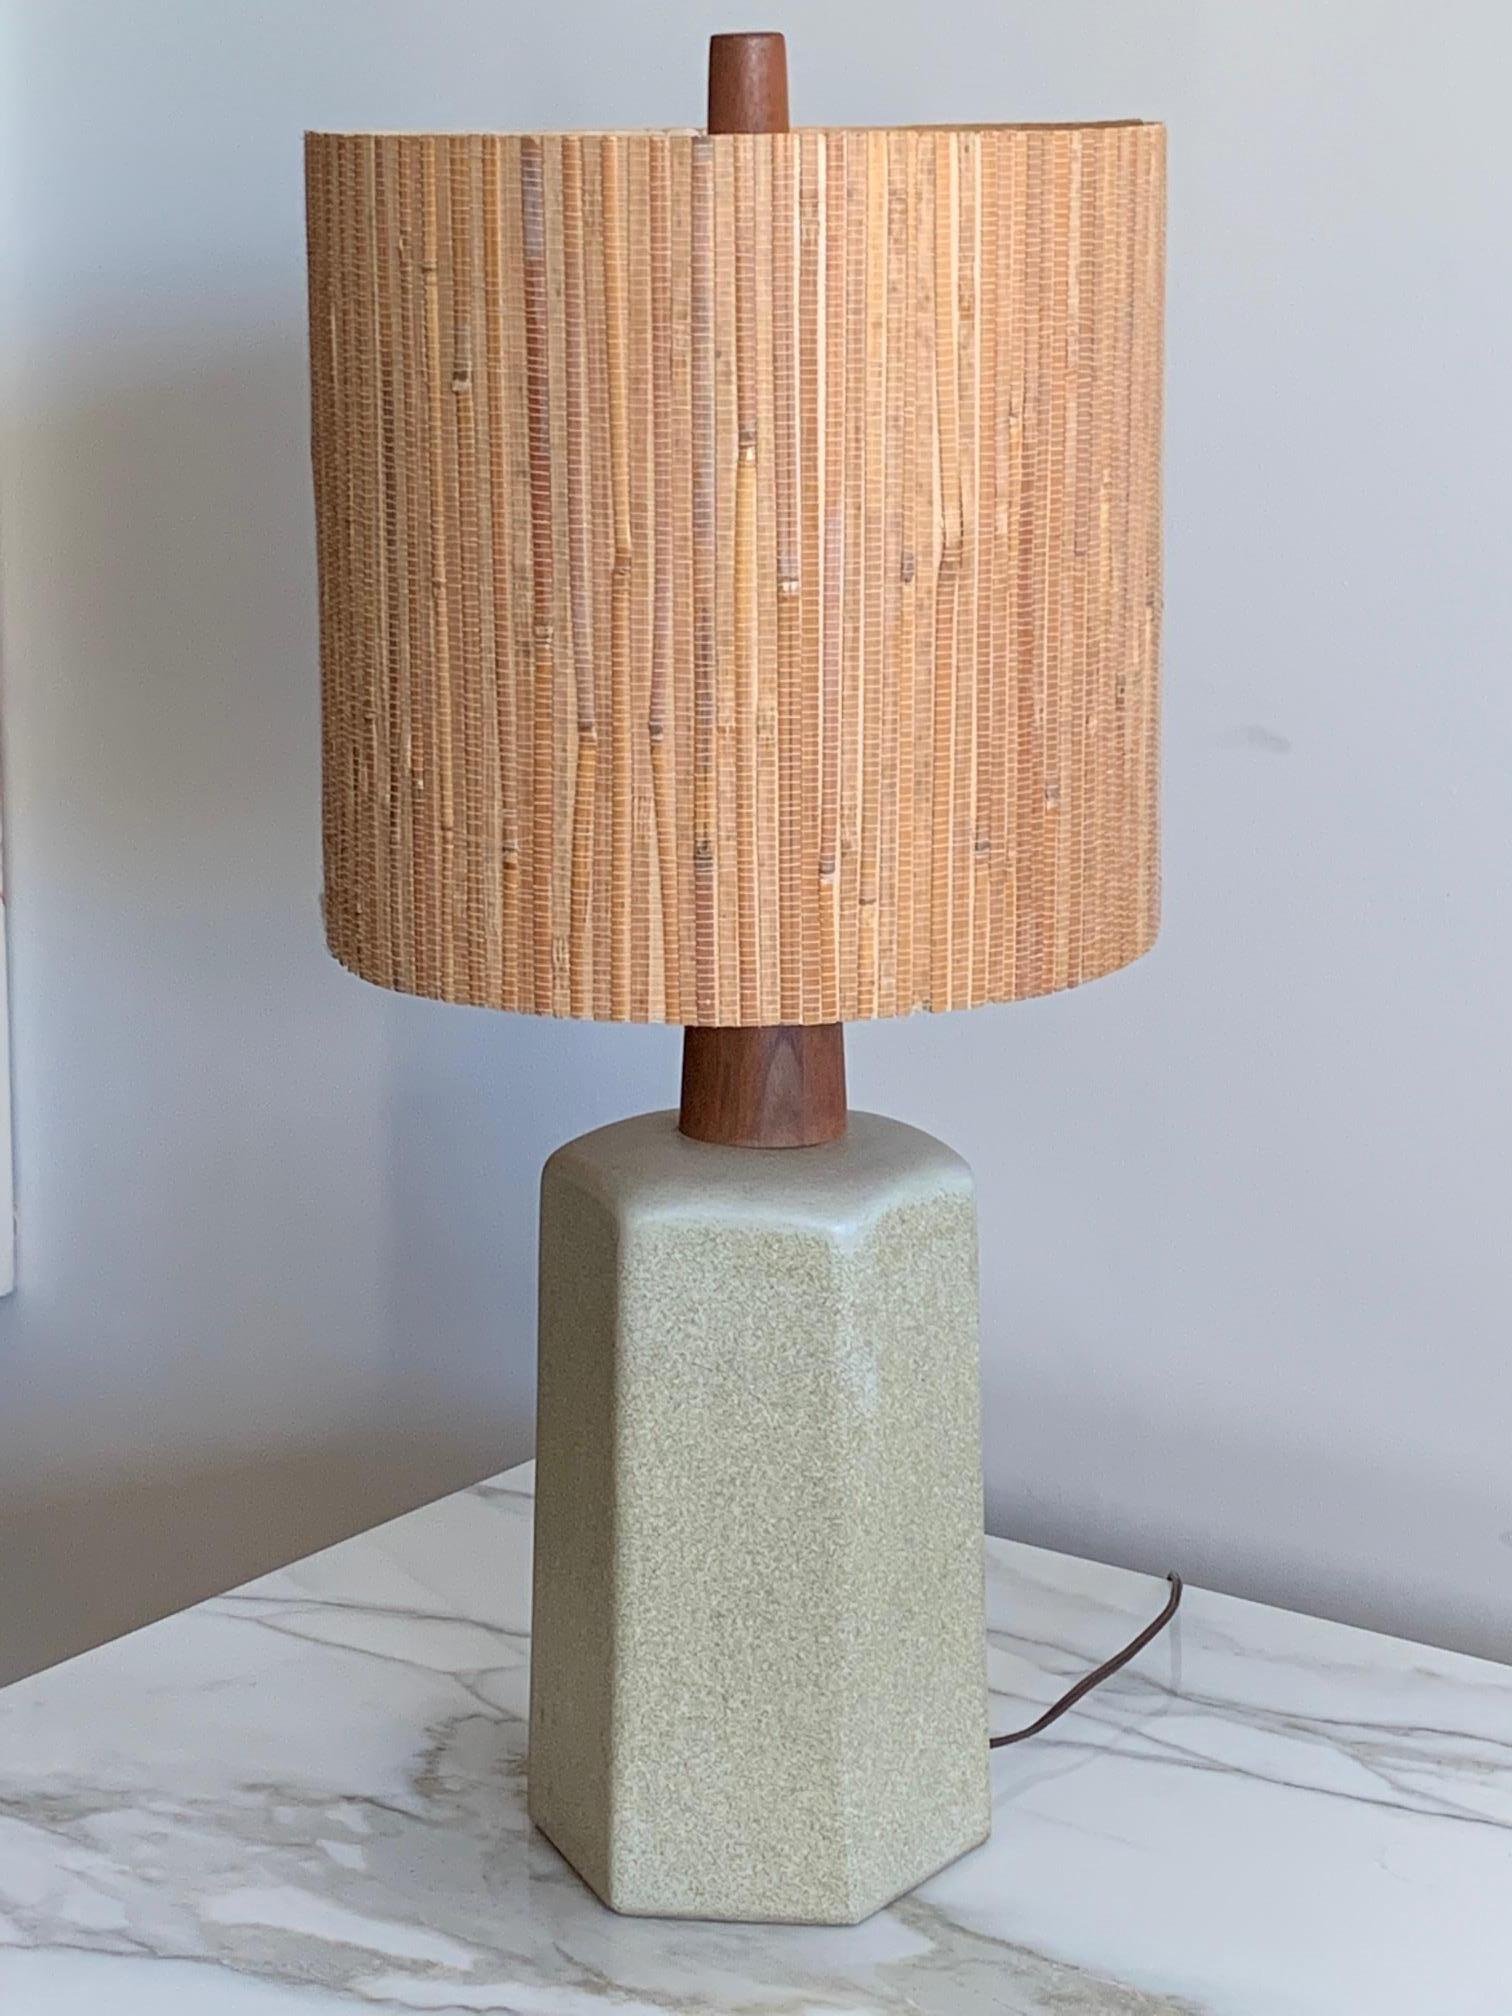 An unusual hexagonal ceramic lamp by Gordon Martz for Marshall studios, circa 1950s. It measures 11